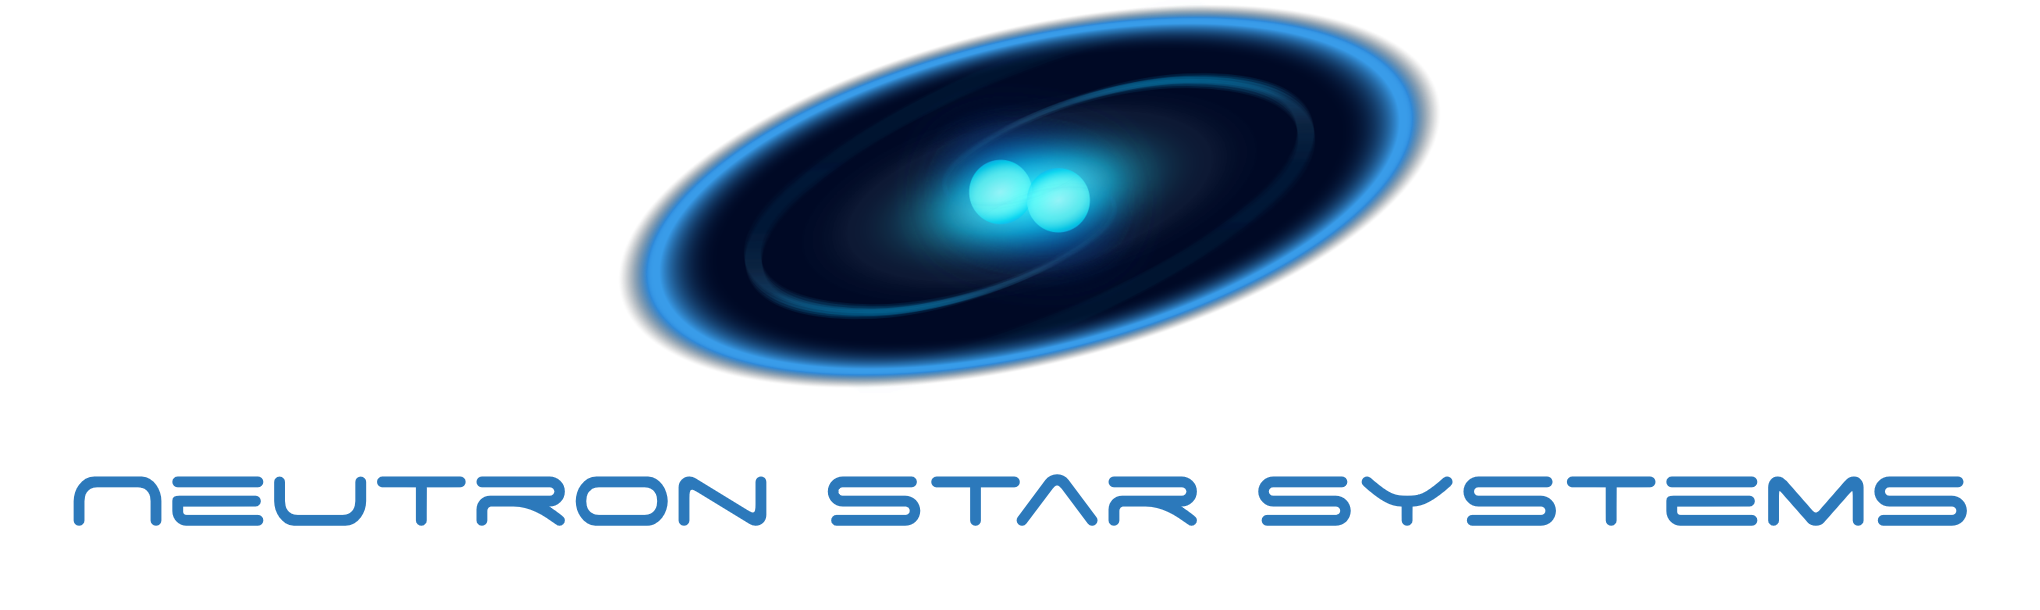 NeutronStar Systems